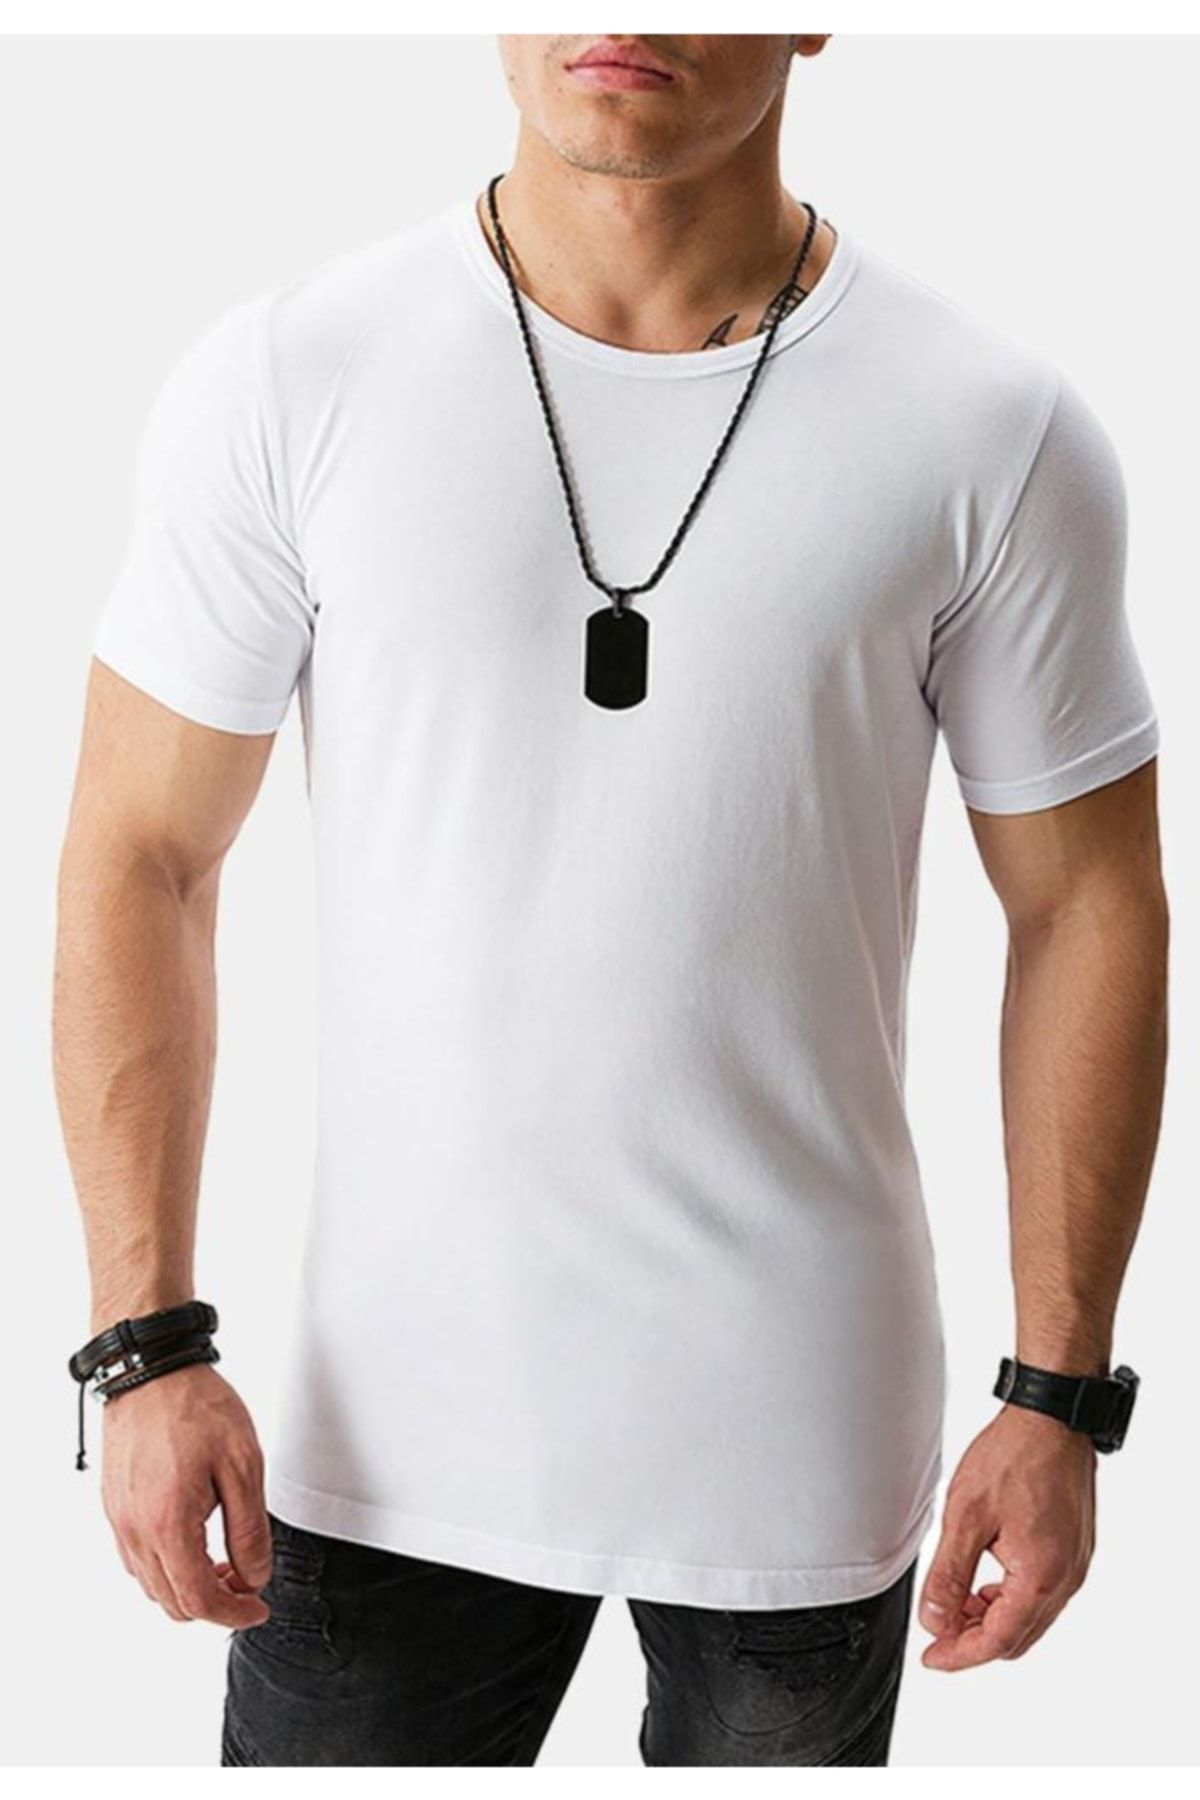 1Moda1Tarz Erkek Beyaz Yuvarlak Yaka Özel Penye Kumaş Slimfit T-shirt